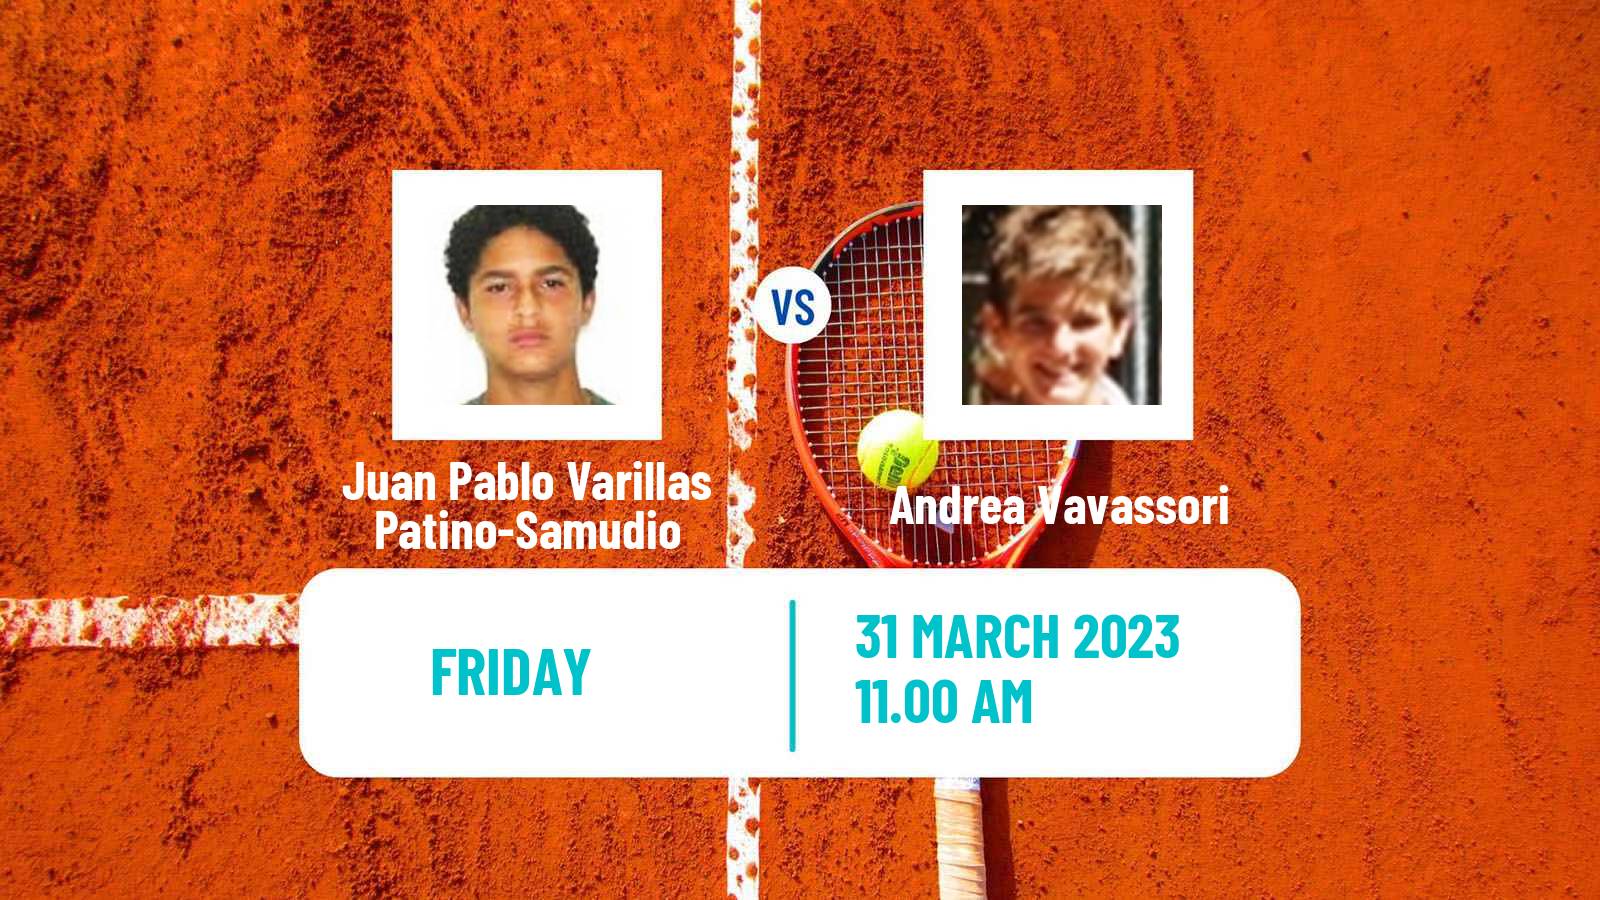 Tennis ATP Challenger Juan Pablo Varillas Patino-Samudio - Andrea Vavassori